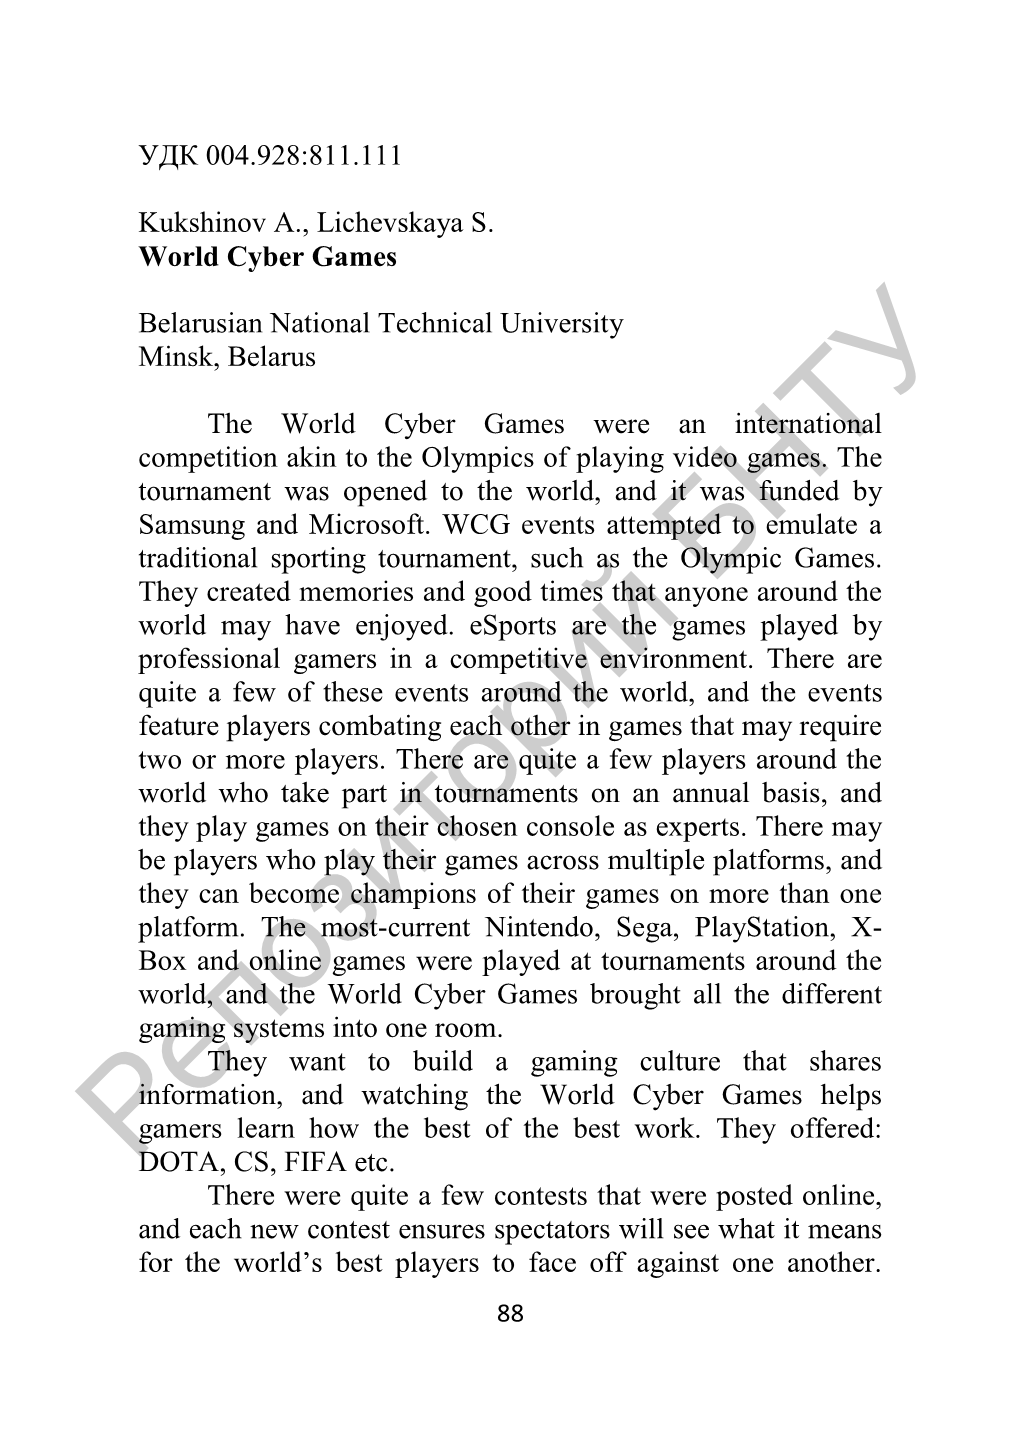 World Cyber Games